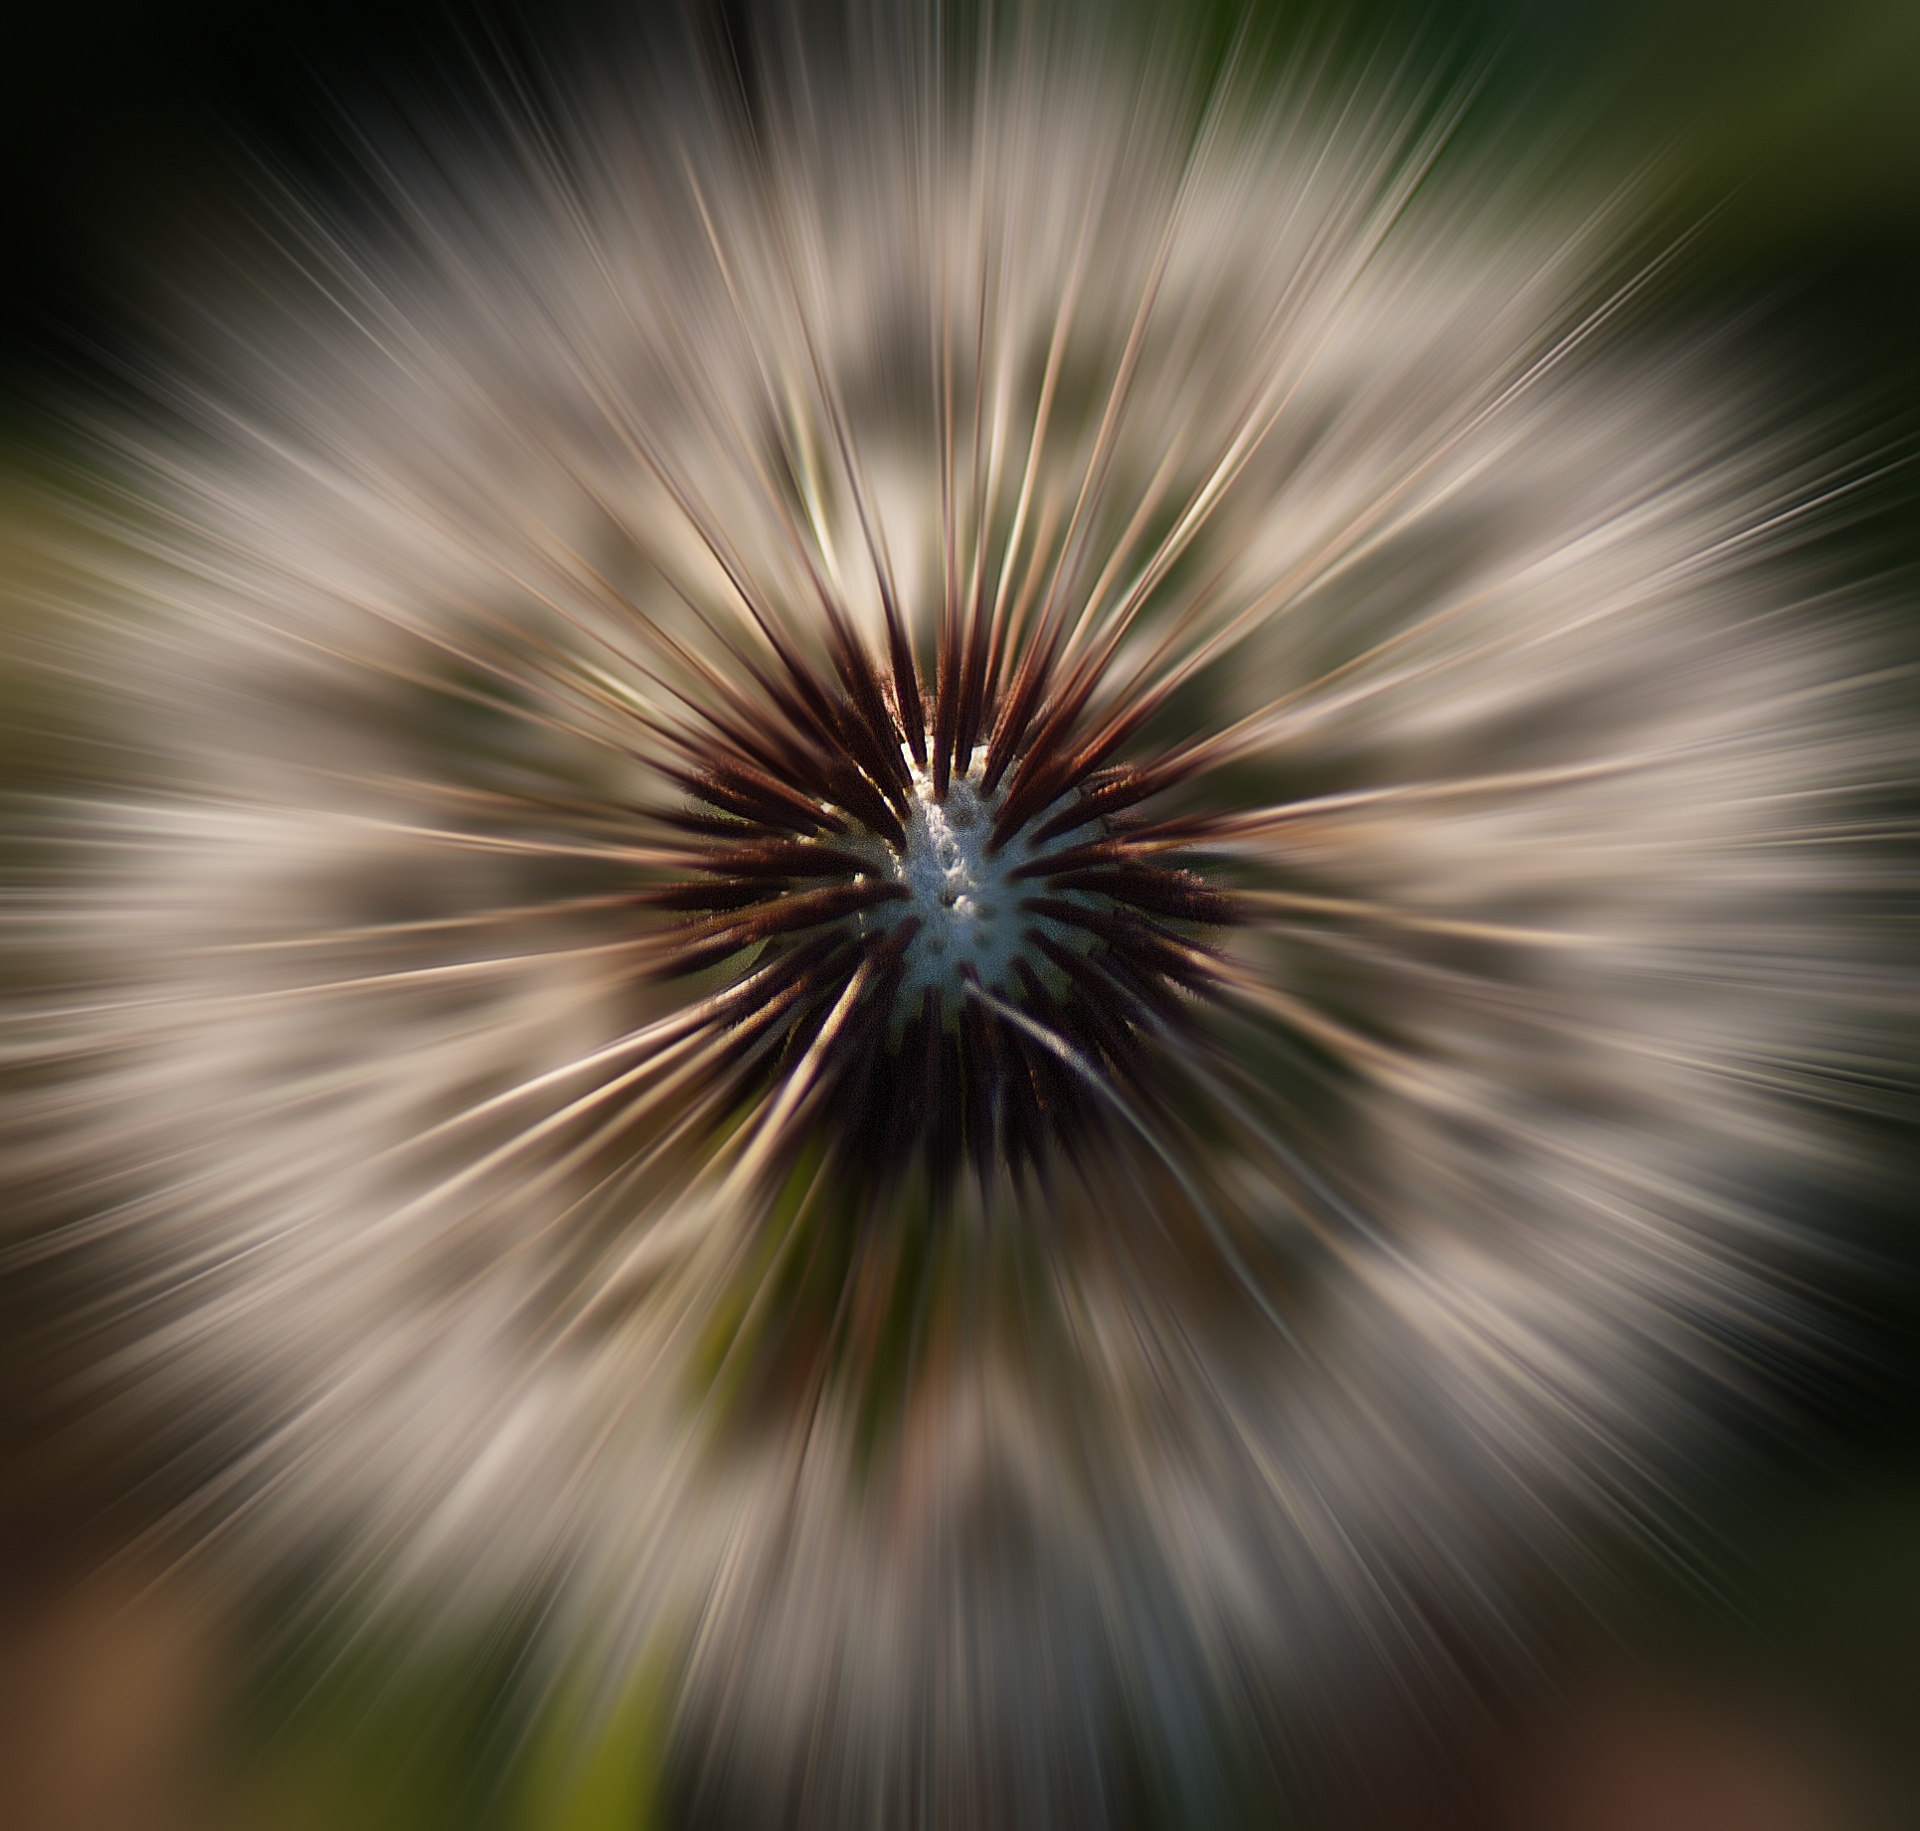 Zoom Burst Image Of Dandelion Seed